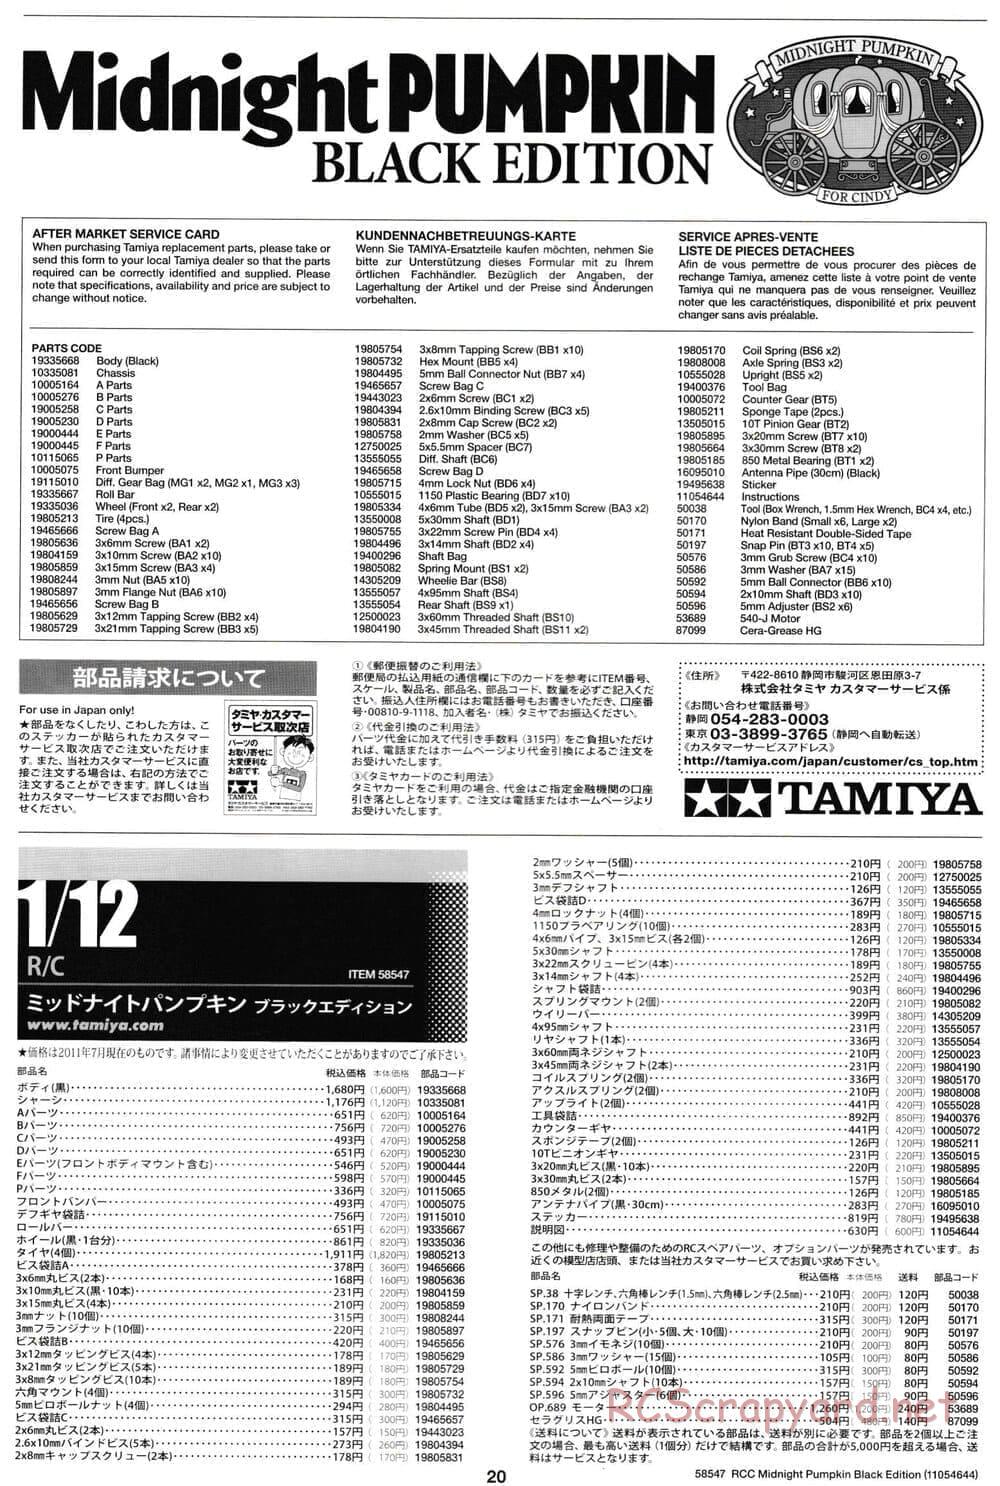 Tamiya - Midnight Pumpkin - Black Edition - CW-01 Chassis - Manual - Page 20